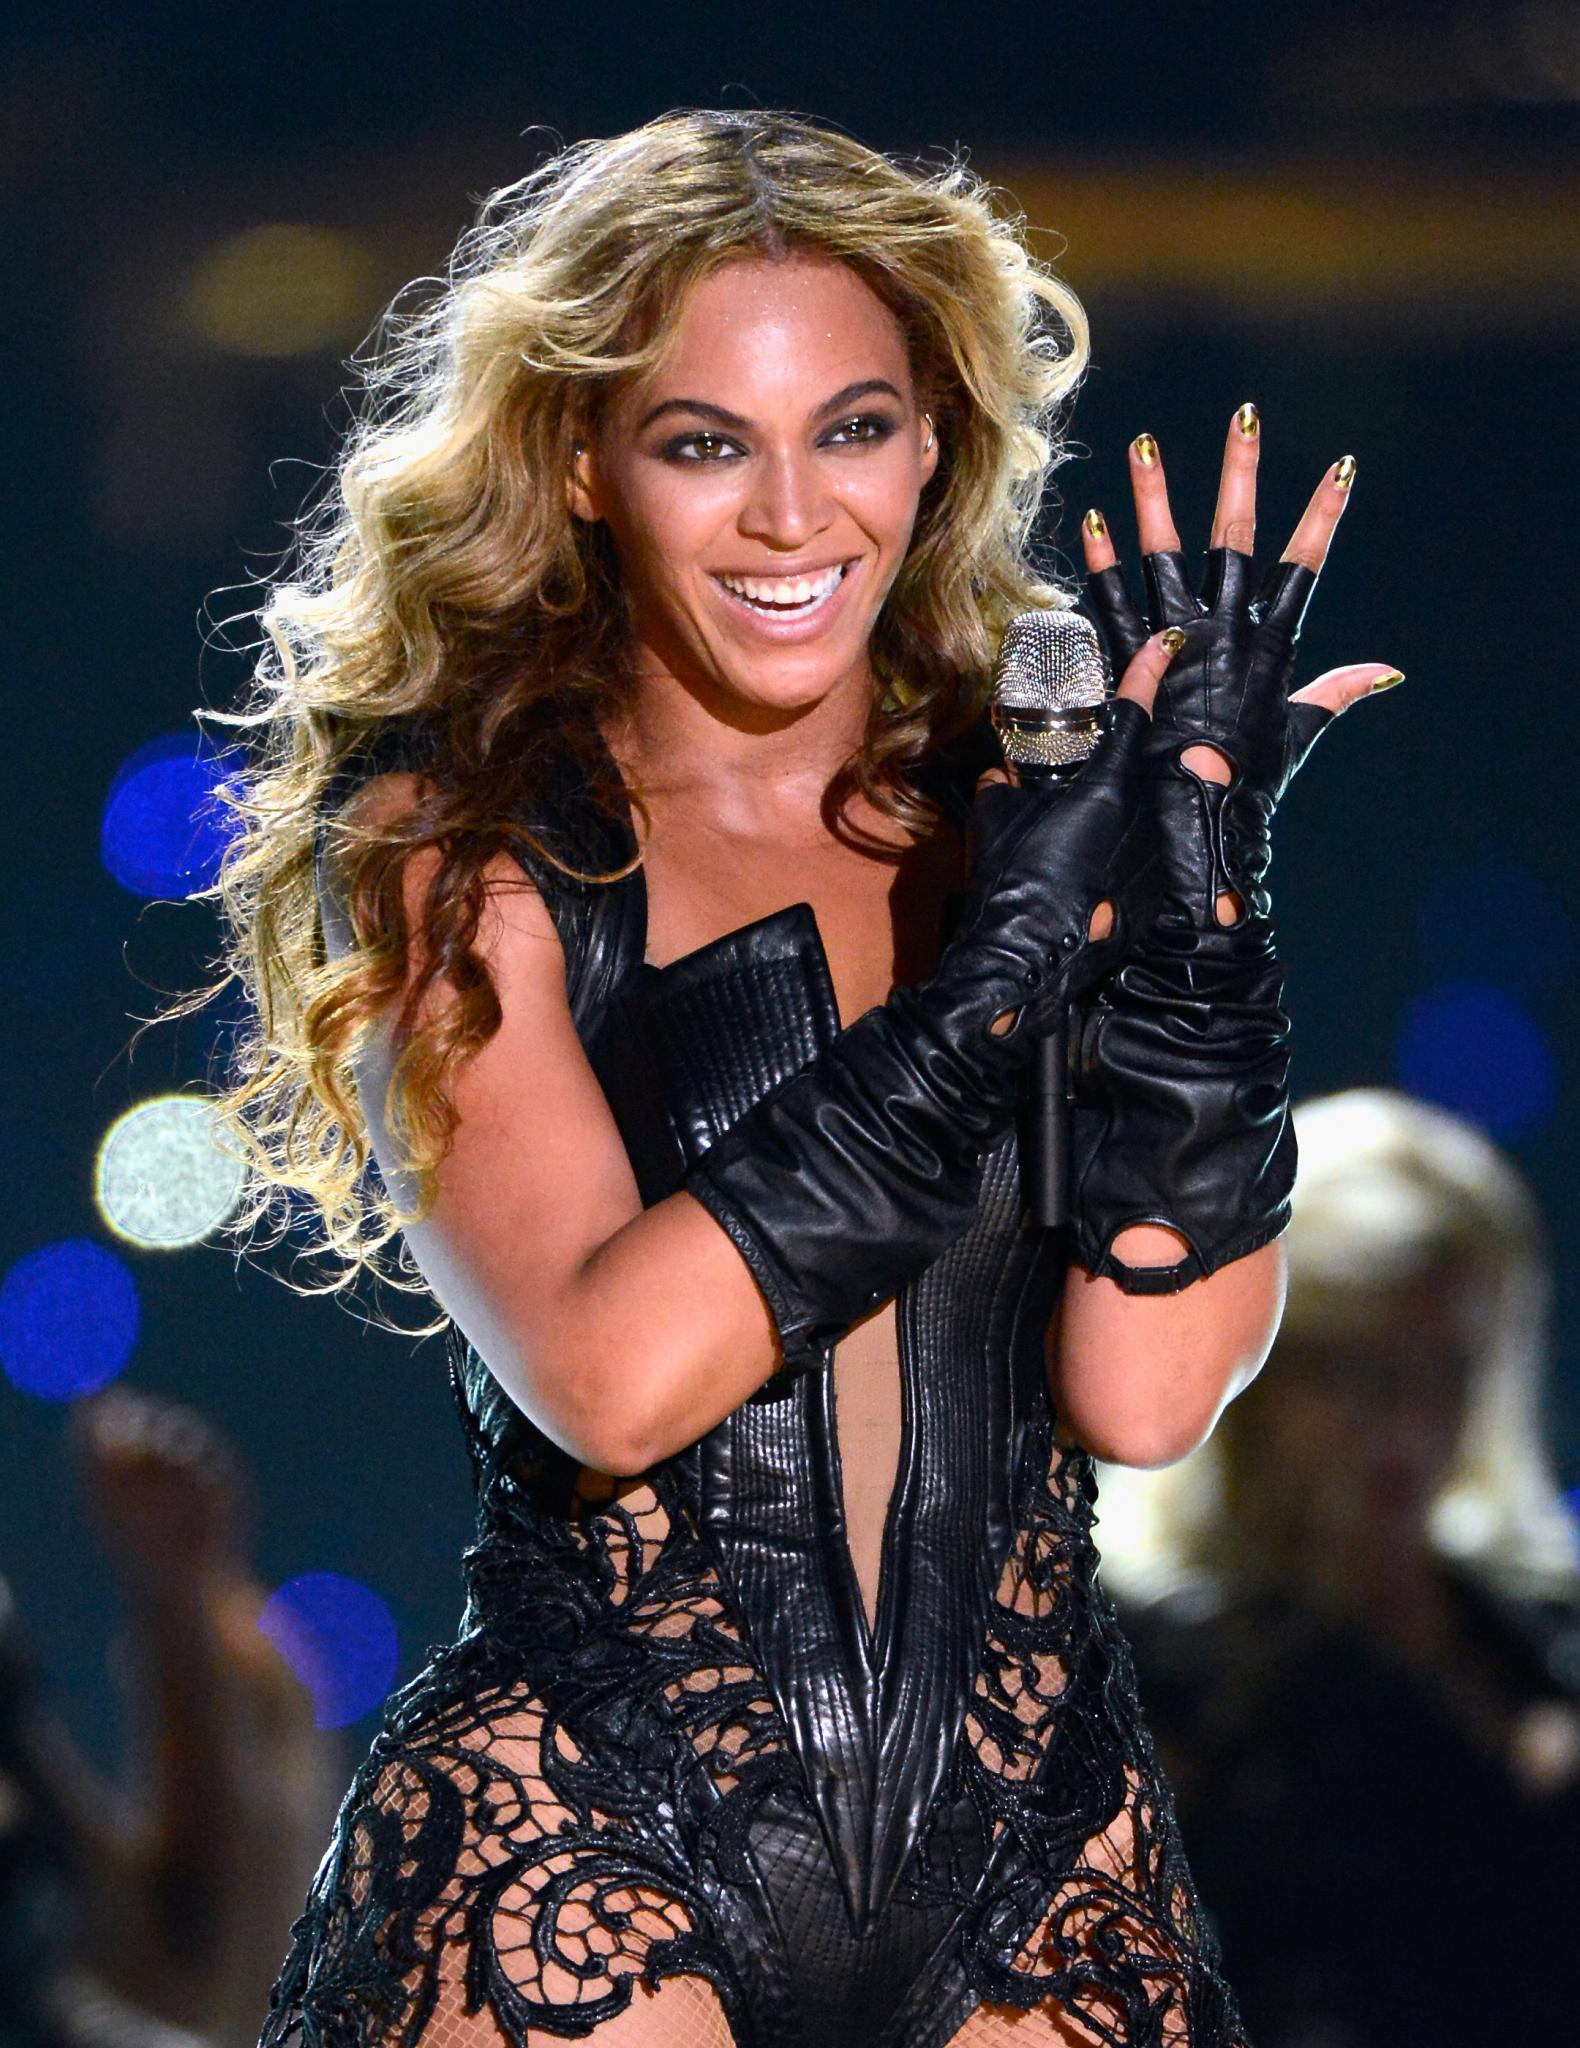 Beyoncé to Headline 2013 ESSENCE Festival
